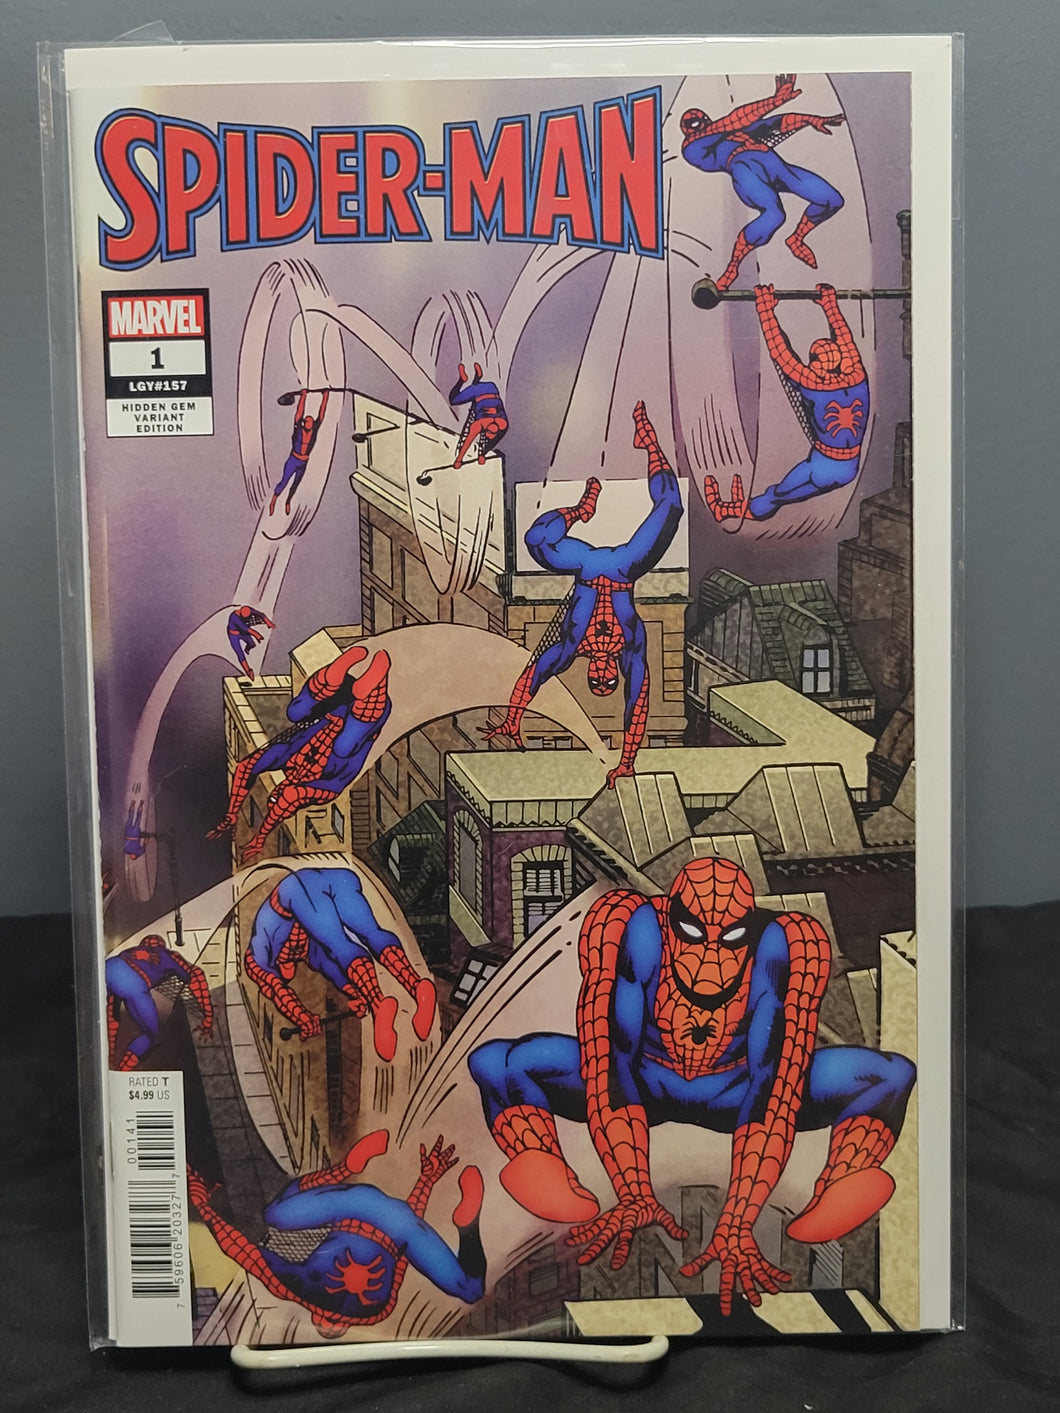 Spider-Man #1 1:100 Variant